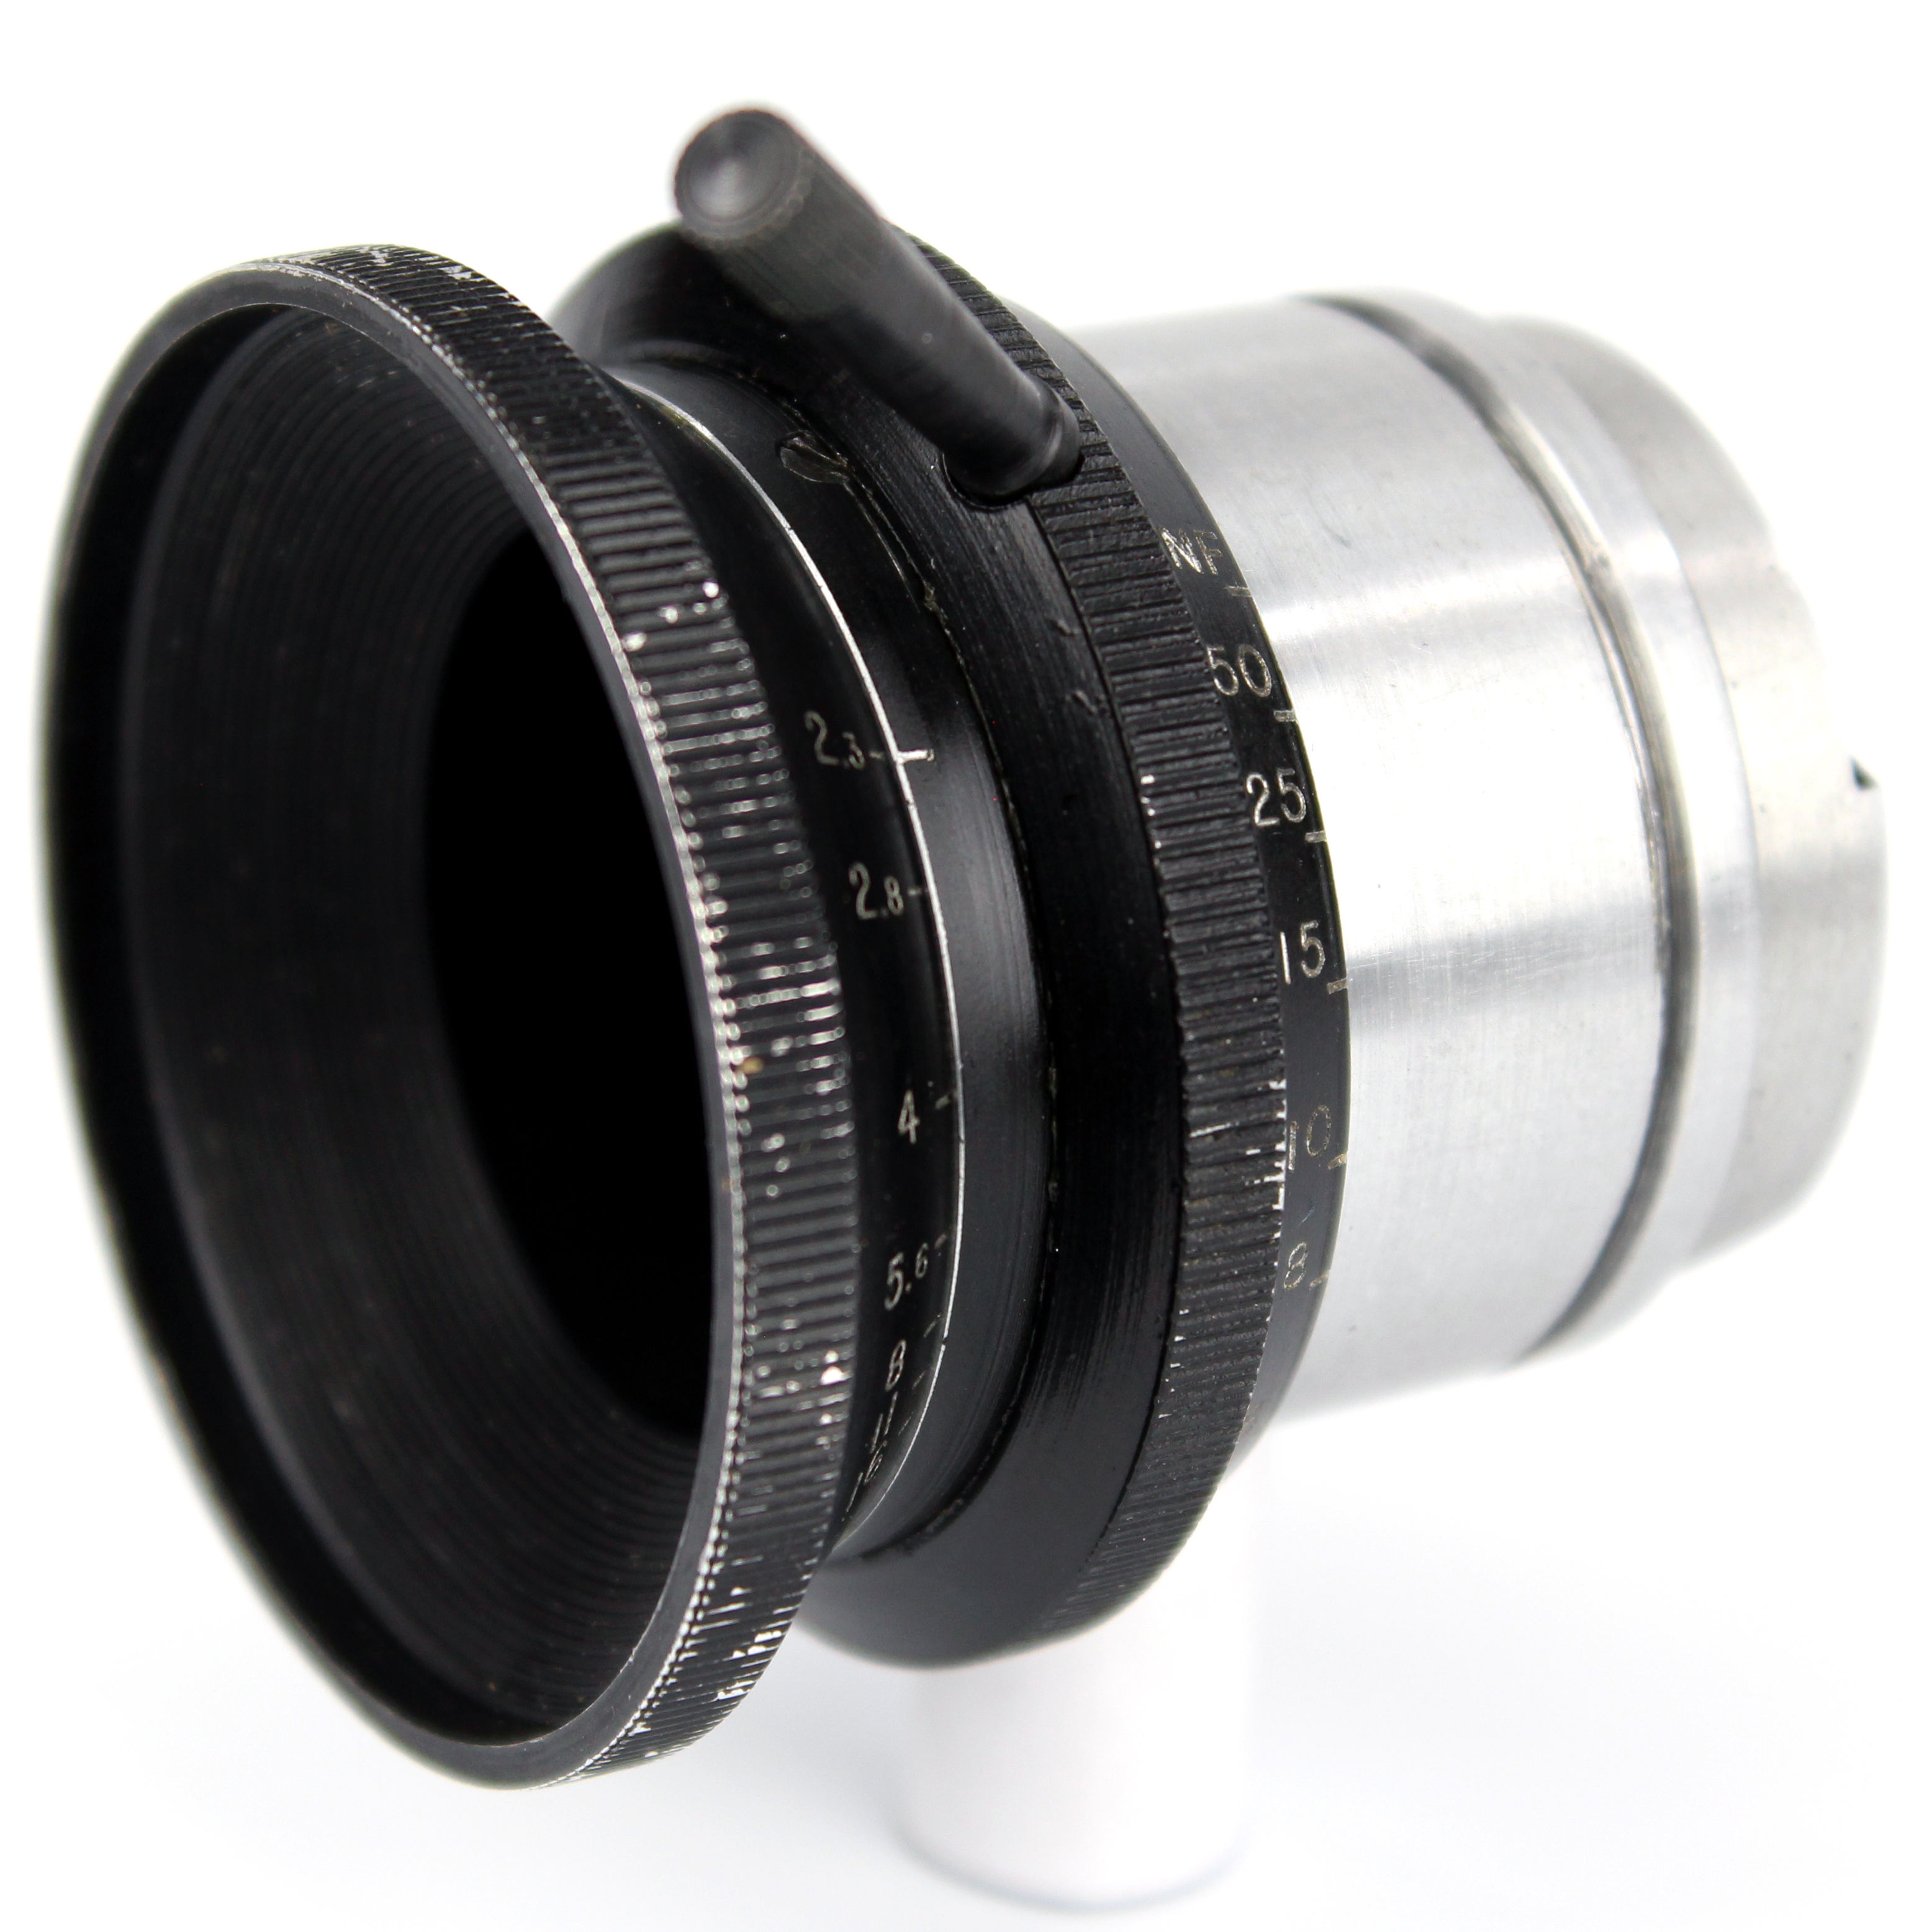 Goerz Apogor 35mm f2.3 lens in Cineflex mount.